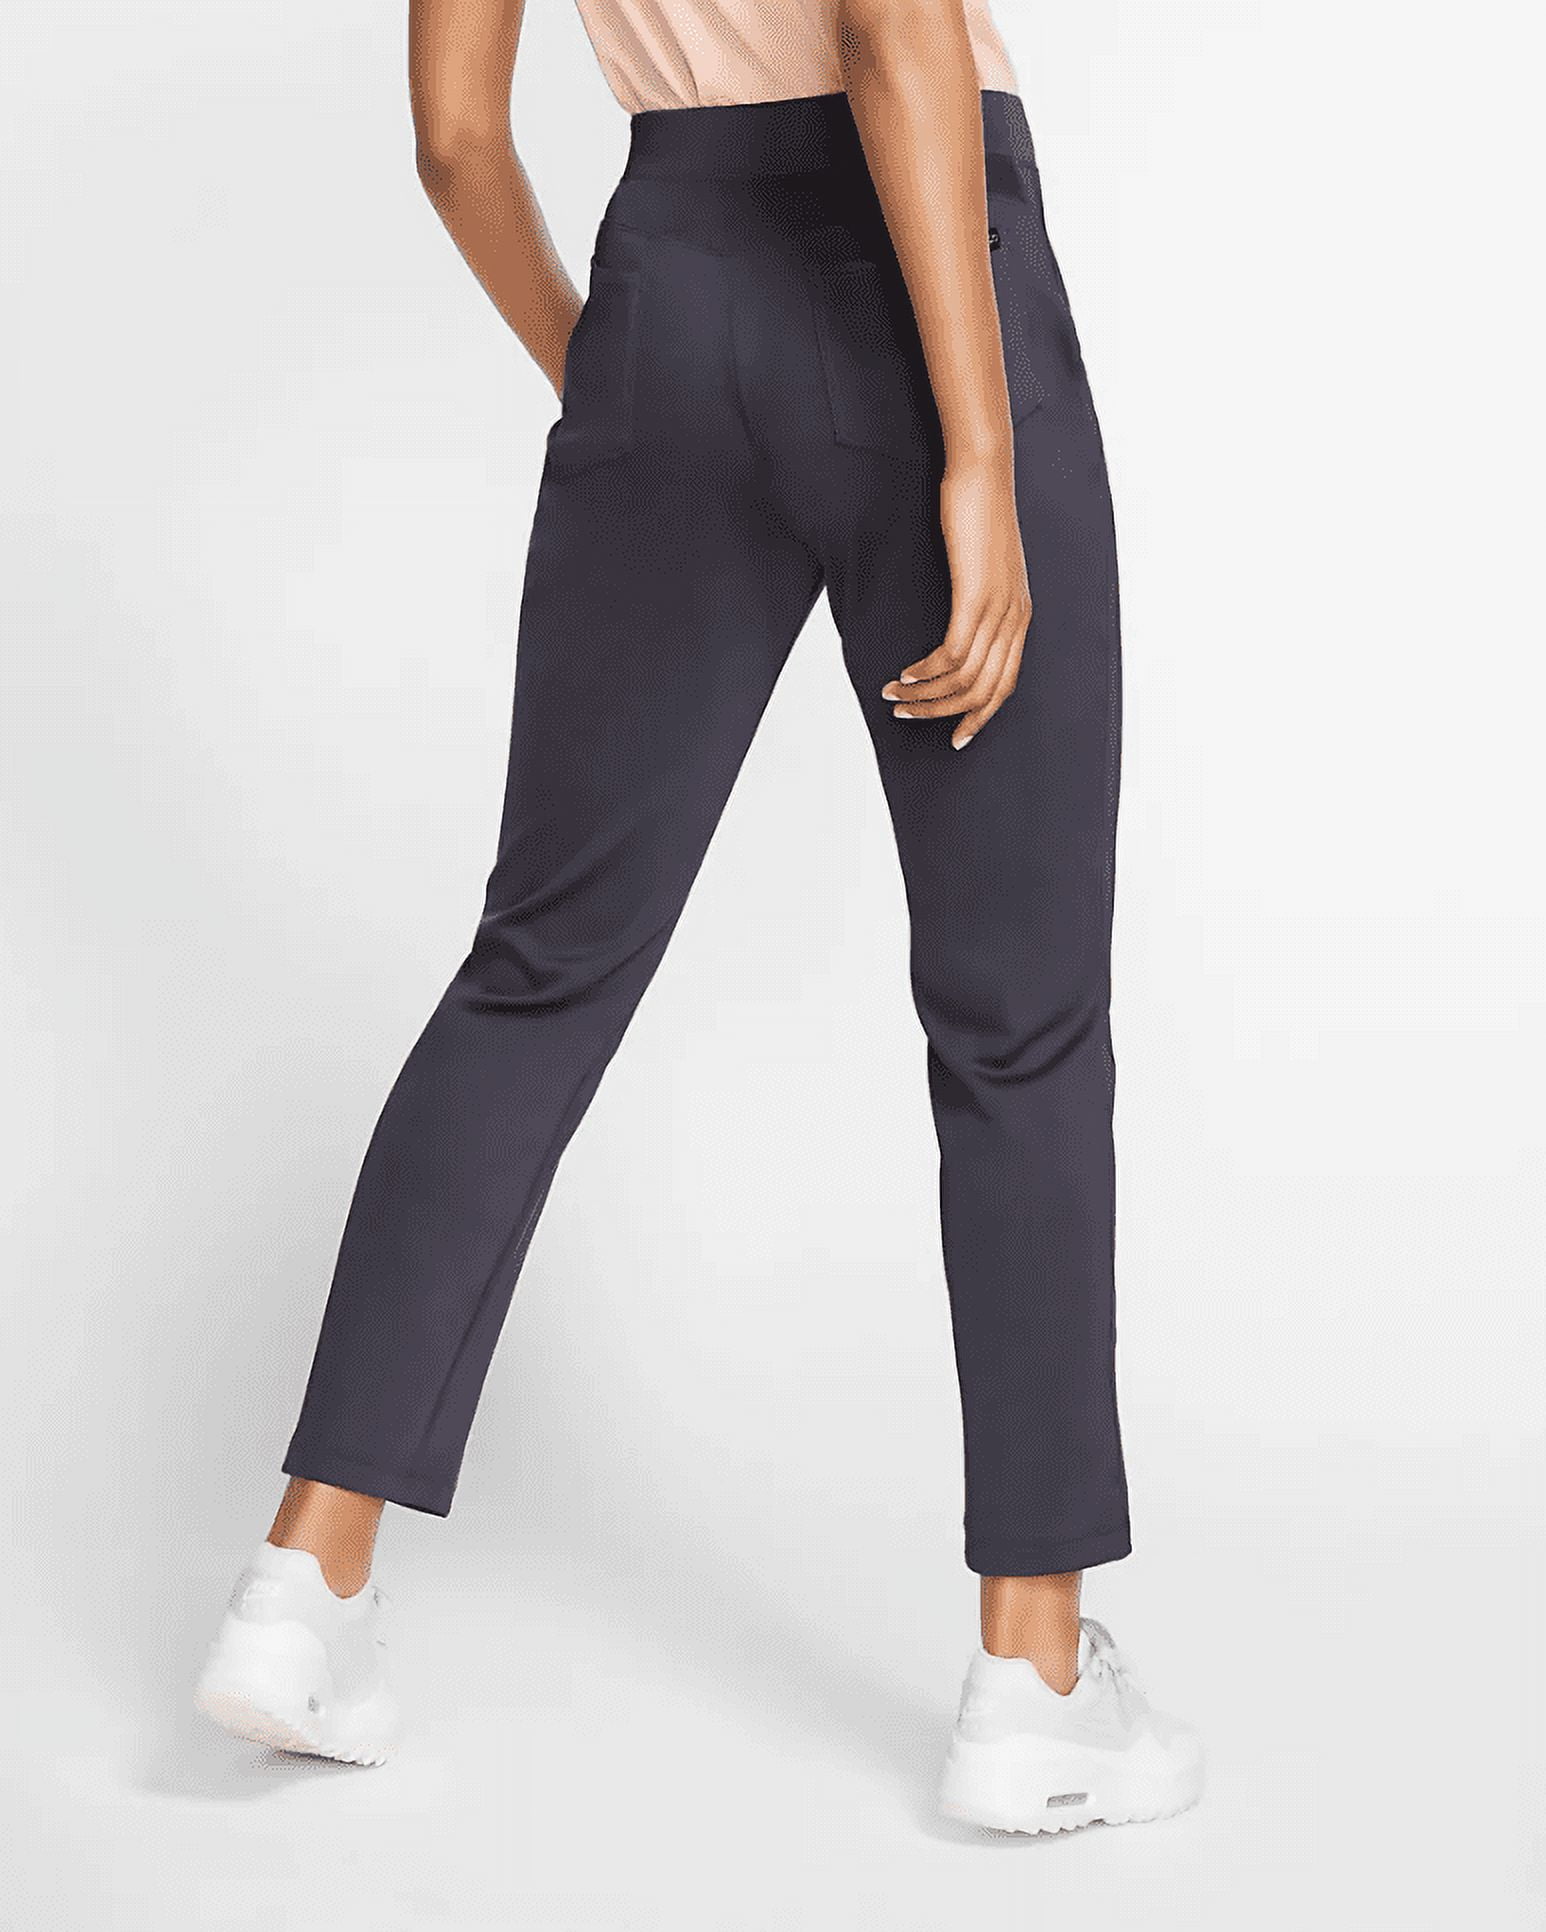 Nike Power Slim Fit Women's 27.5 Black Golf Pants Size L 